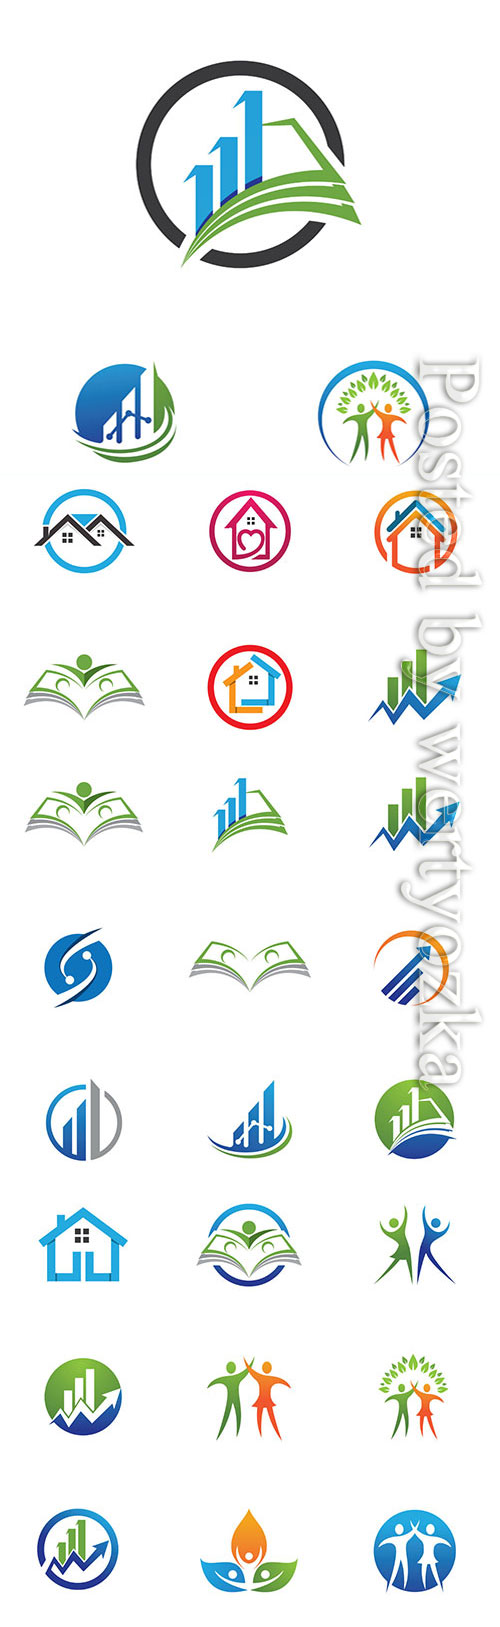 Various logos in vector